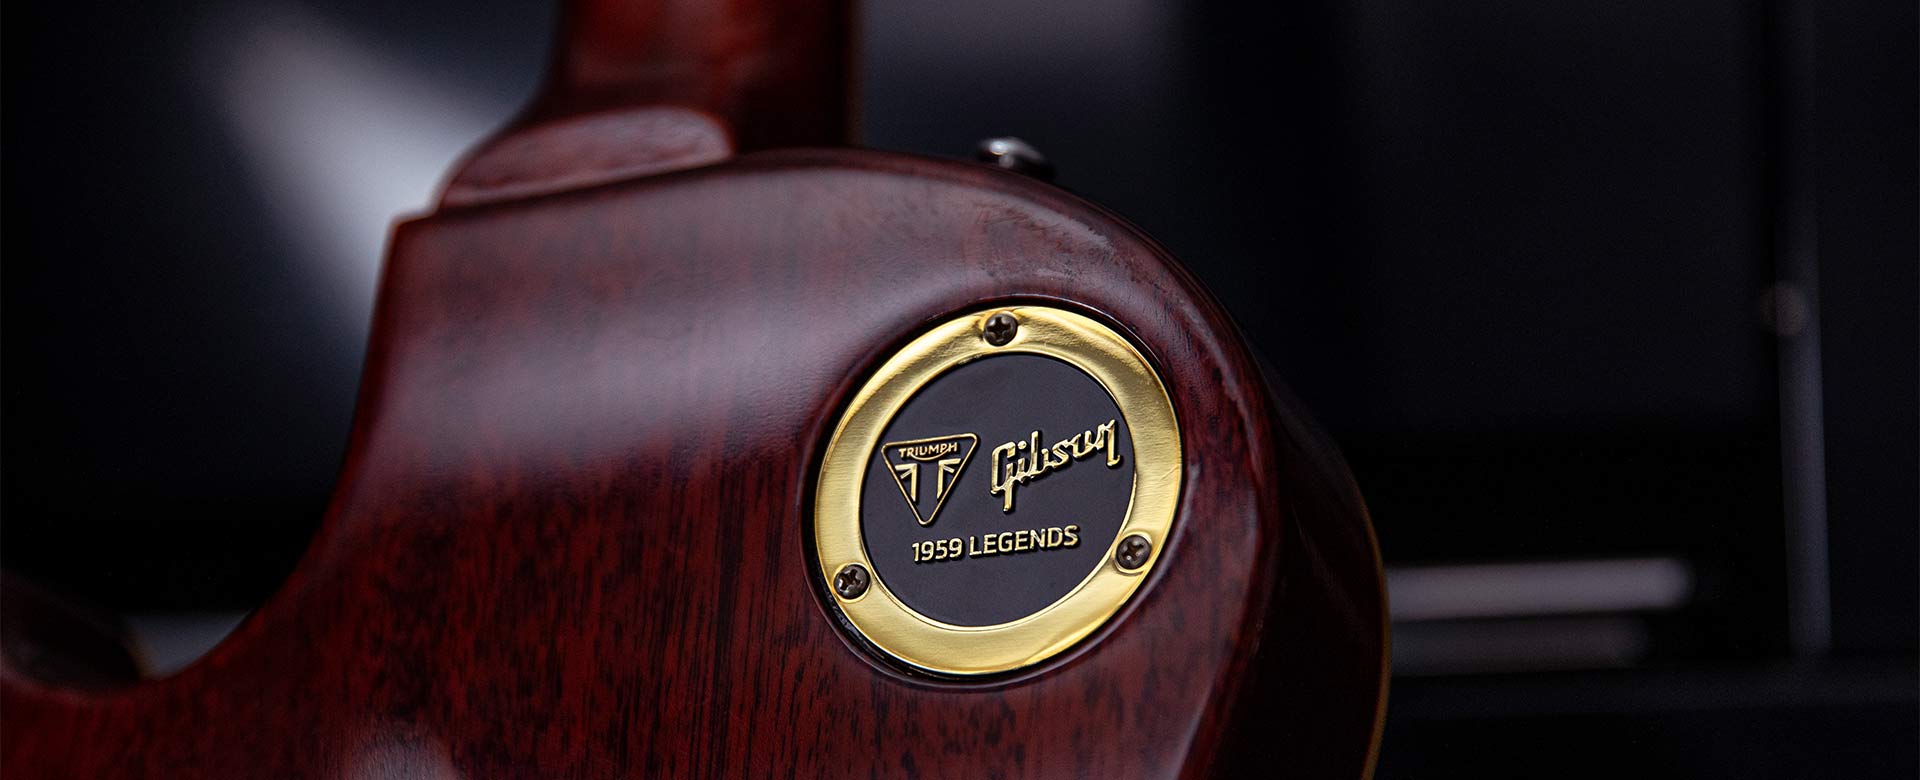 Gibson's custom guitar, featuring the “Triumph Gibson 1959 Legends” partnership logo